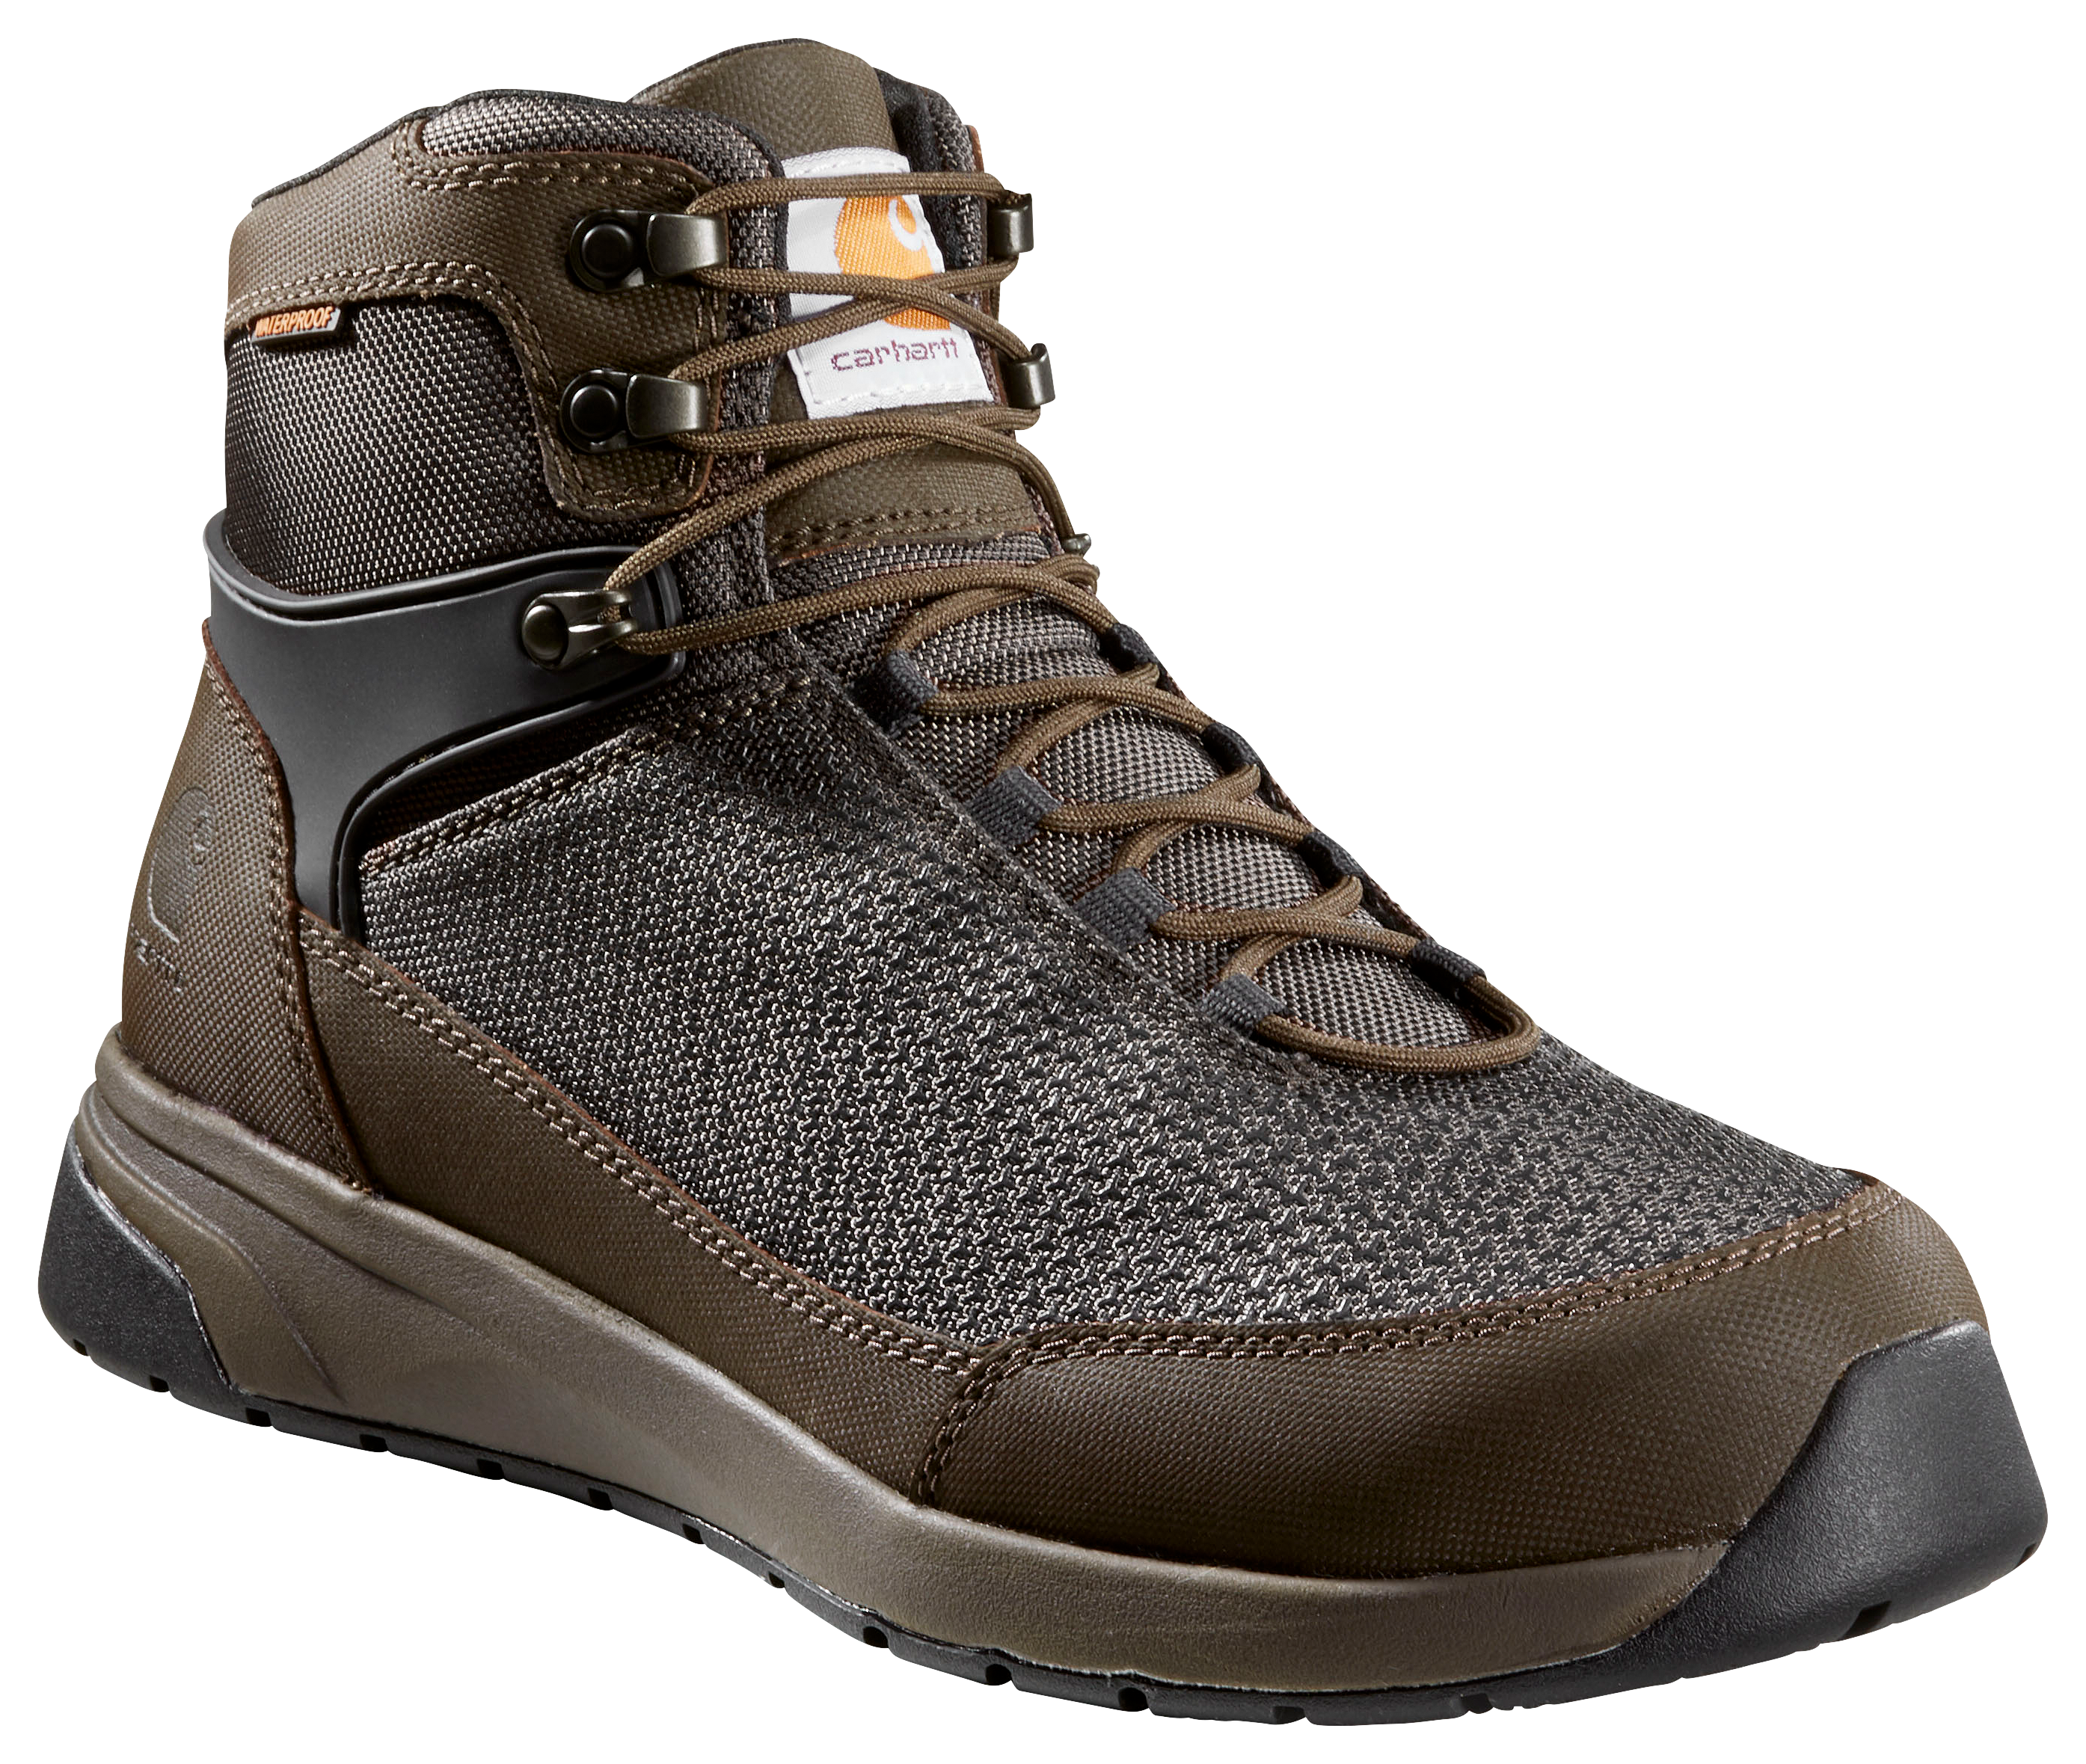 Carhartt Force 6"" Nano Composite-Toe Work Boots for Men - Espresso - 14M